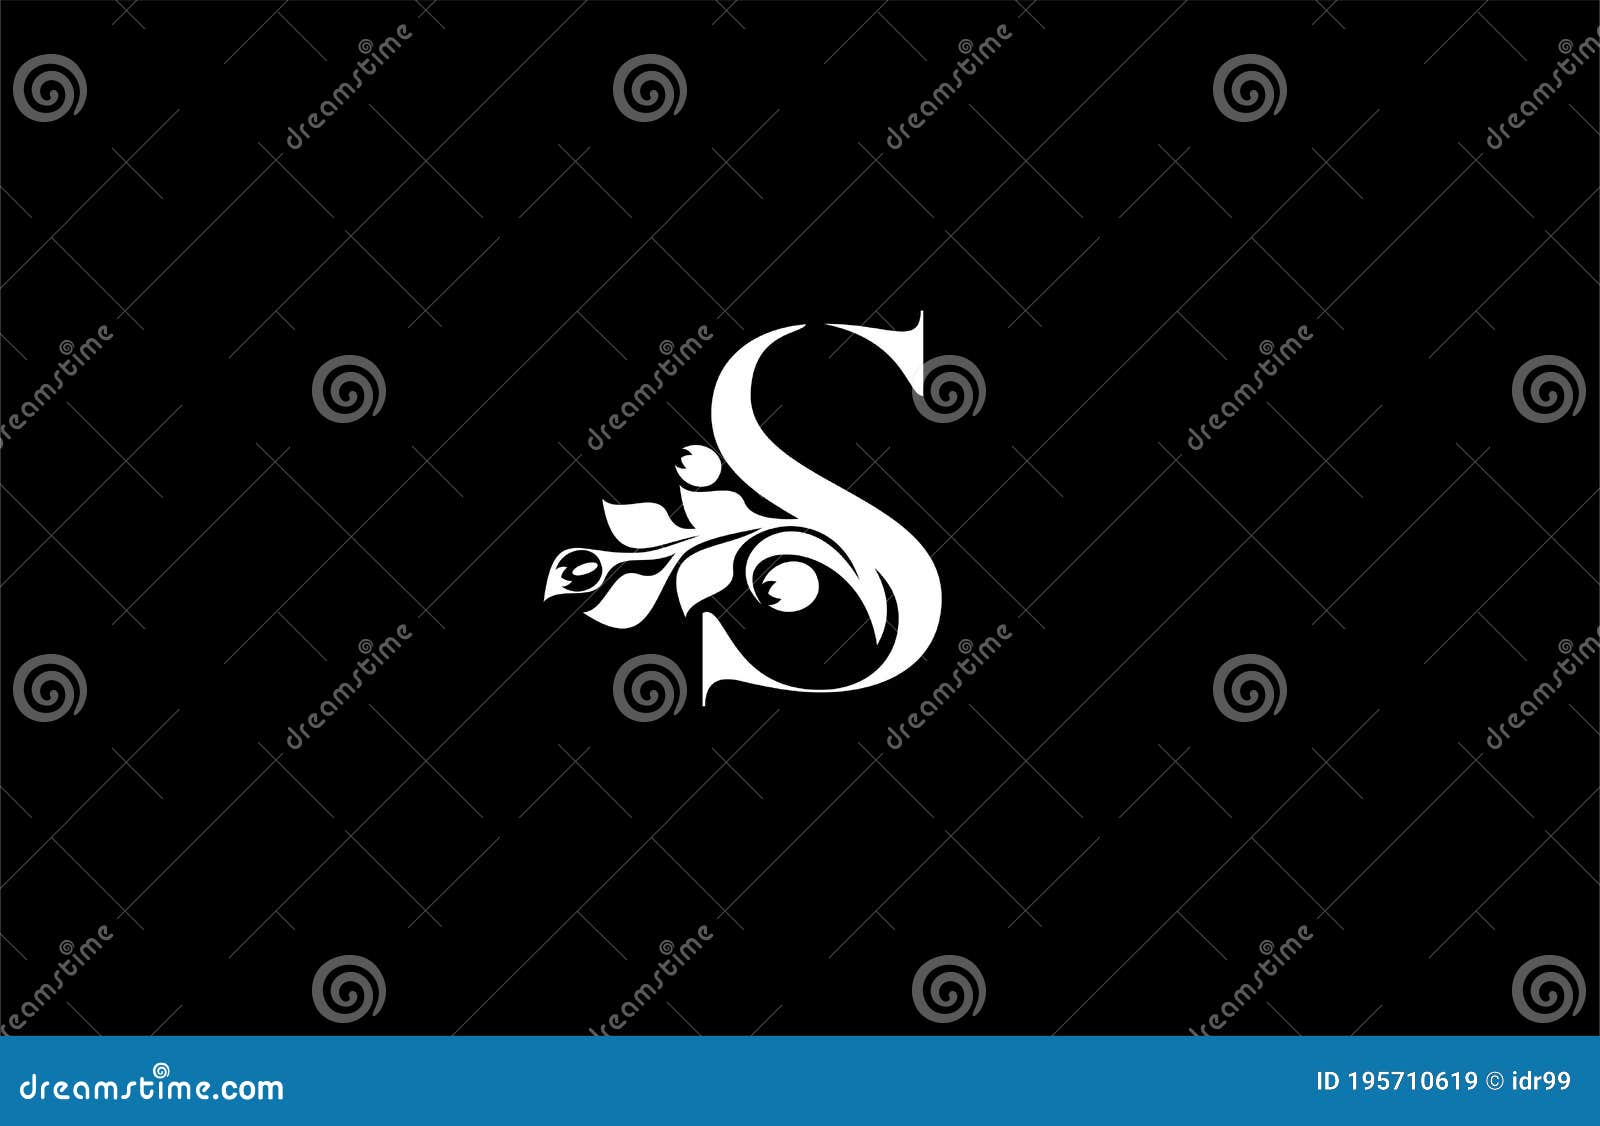 Letter S Logo Beauty Peacock Style Stock Illustration ...